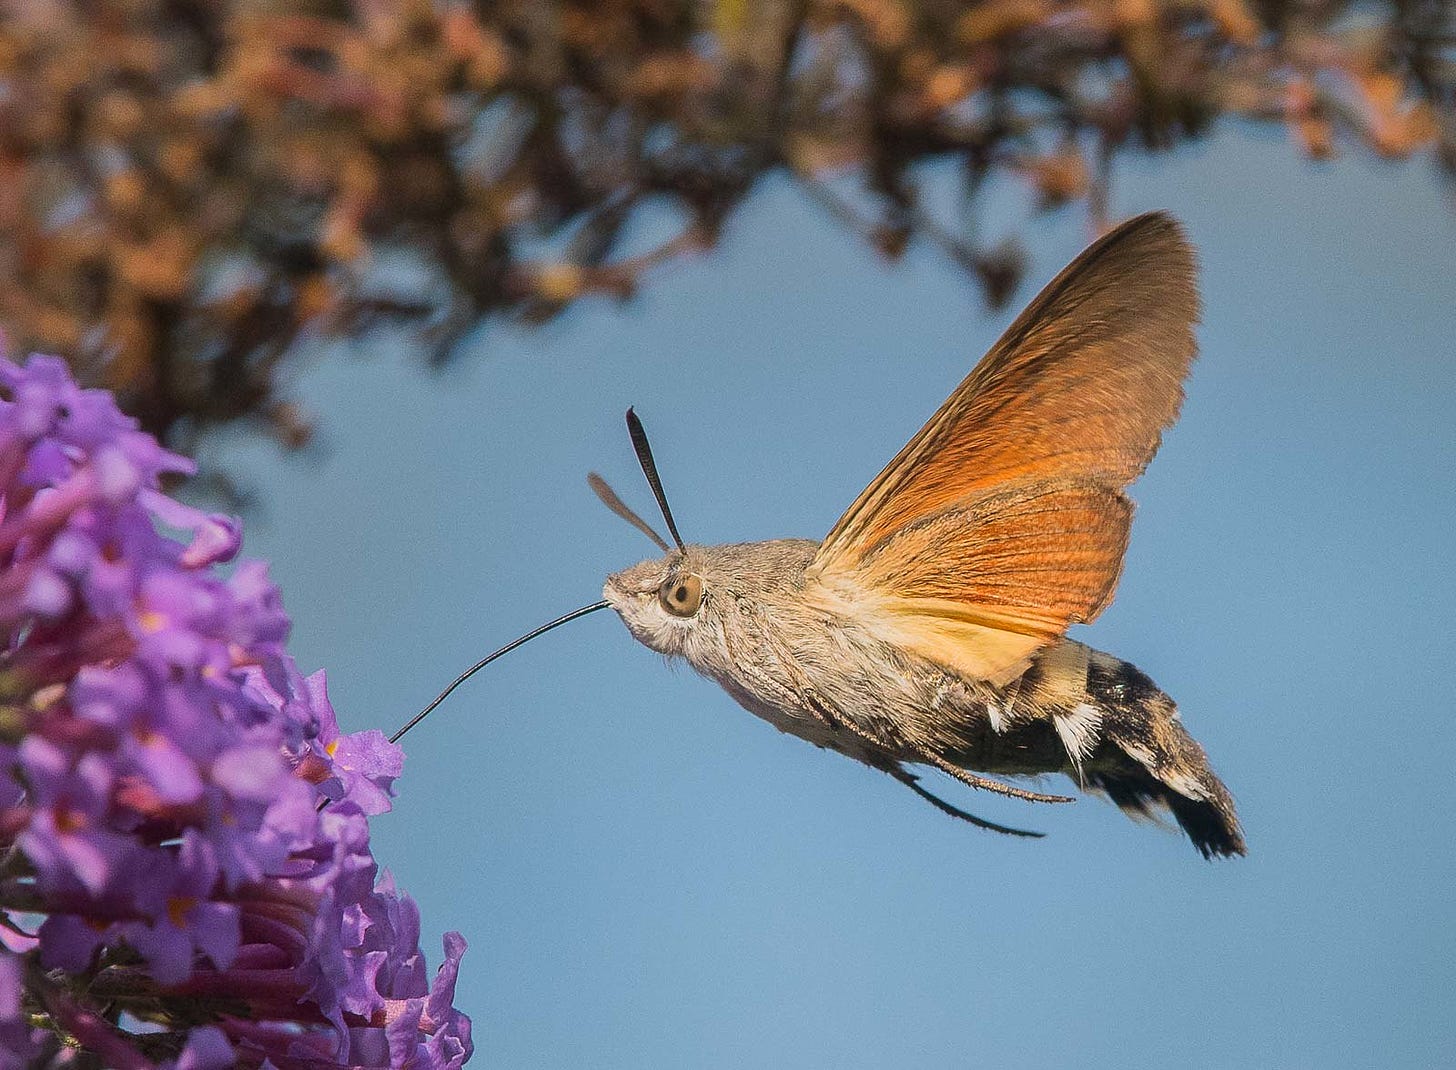 Humming-bird Hawk-moth | Butterfly Conservation